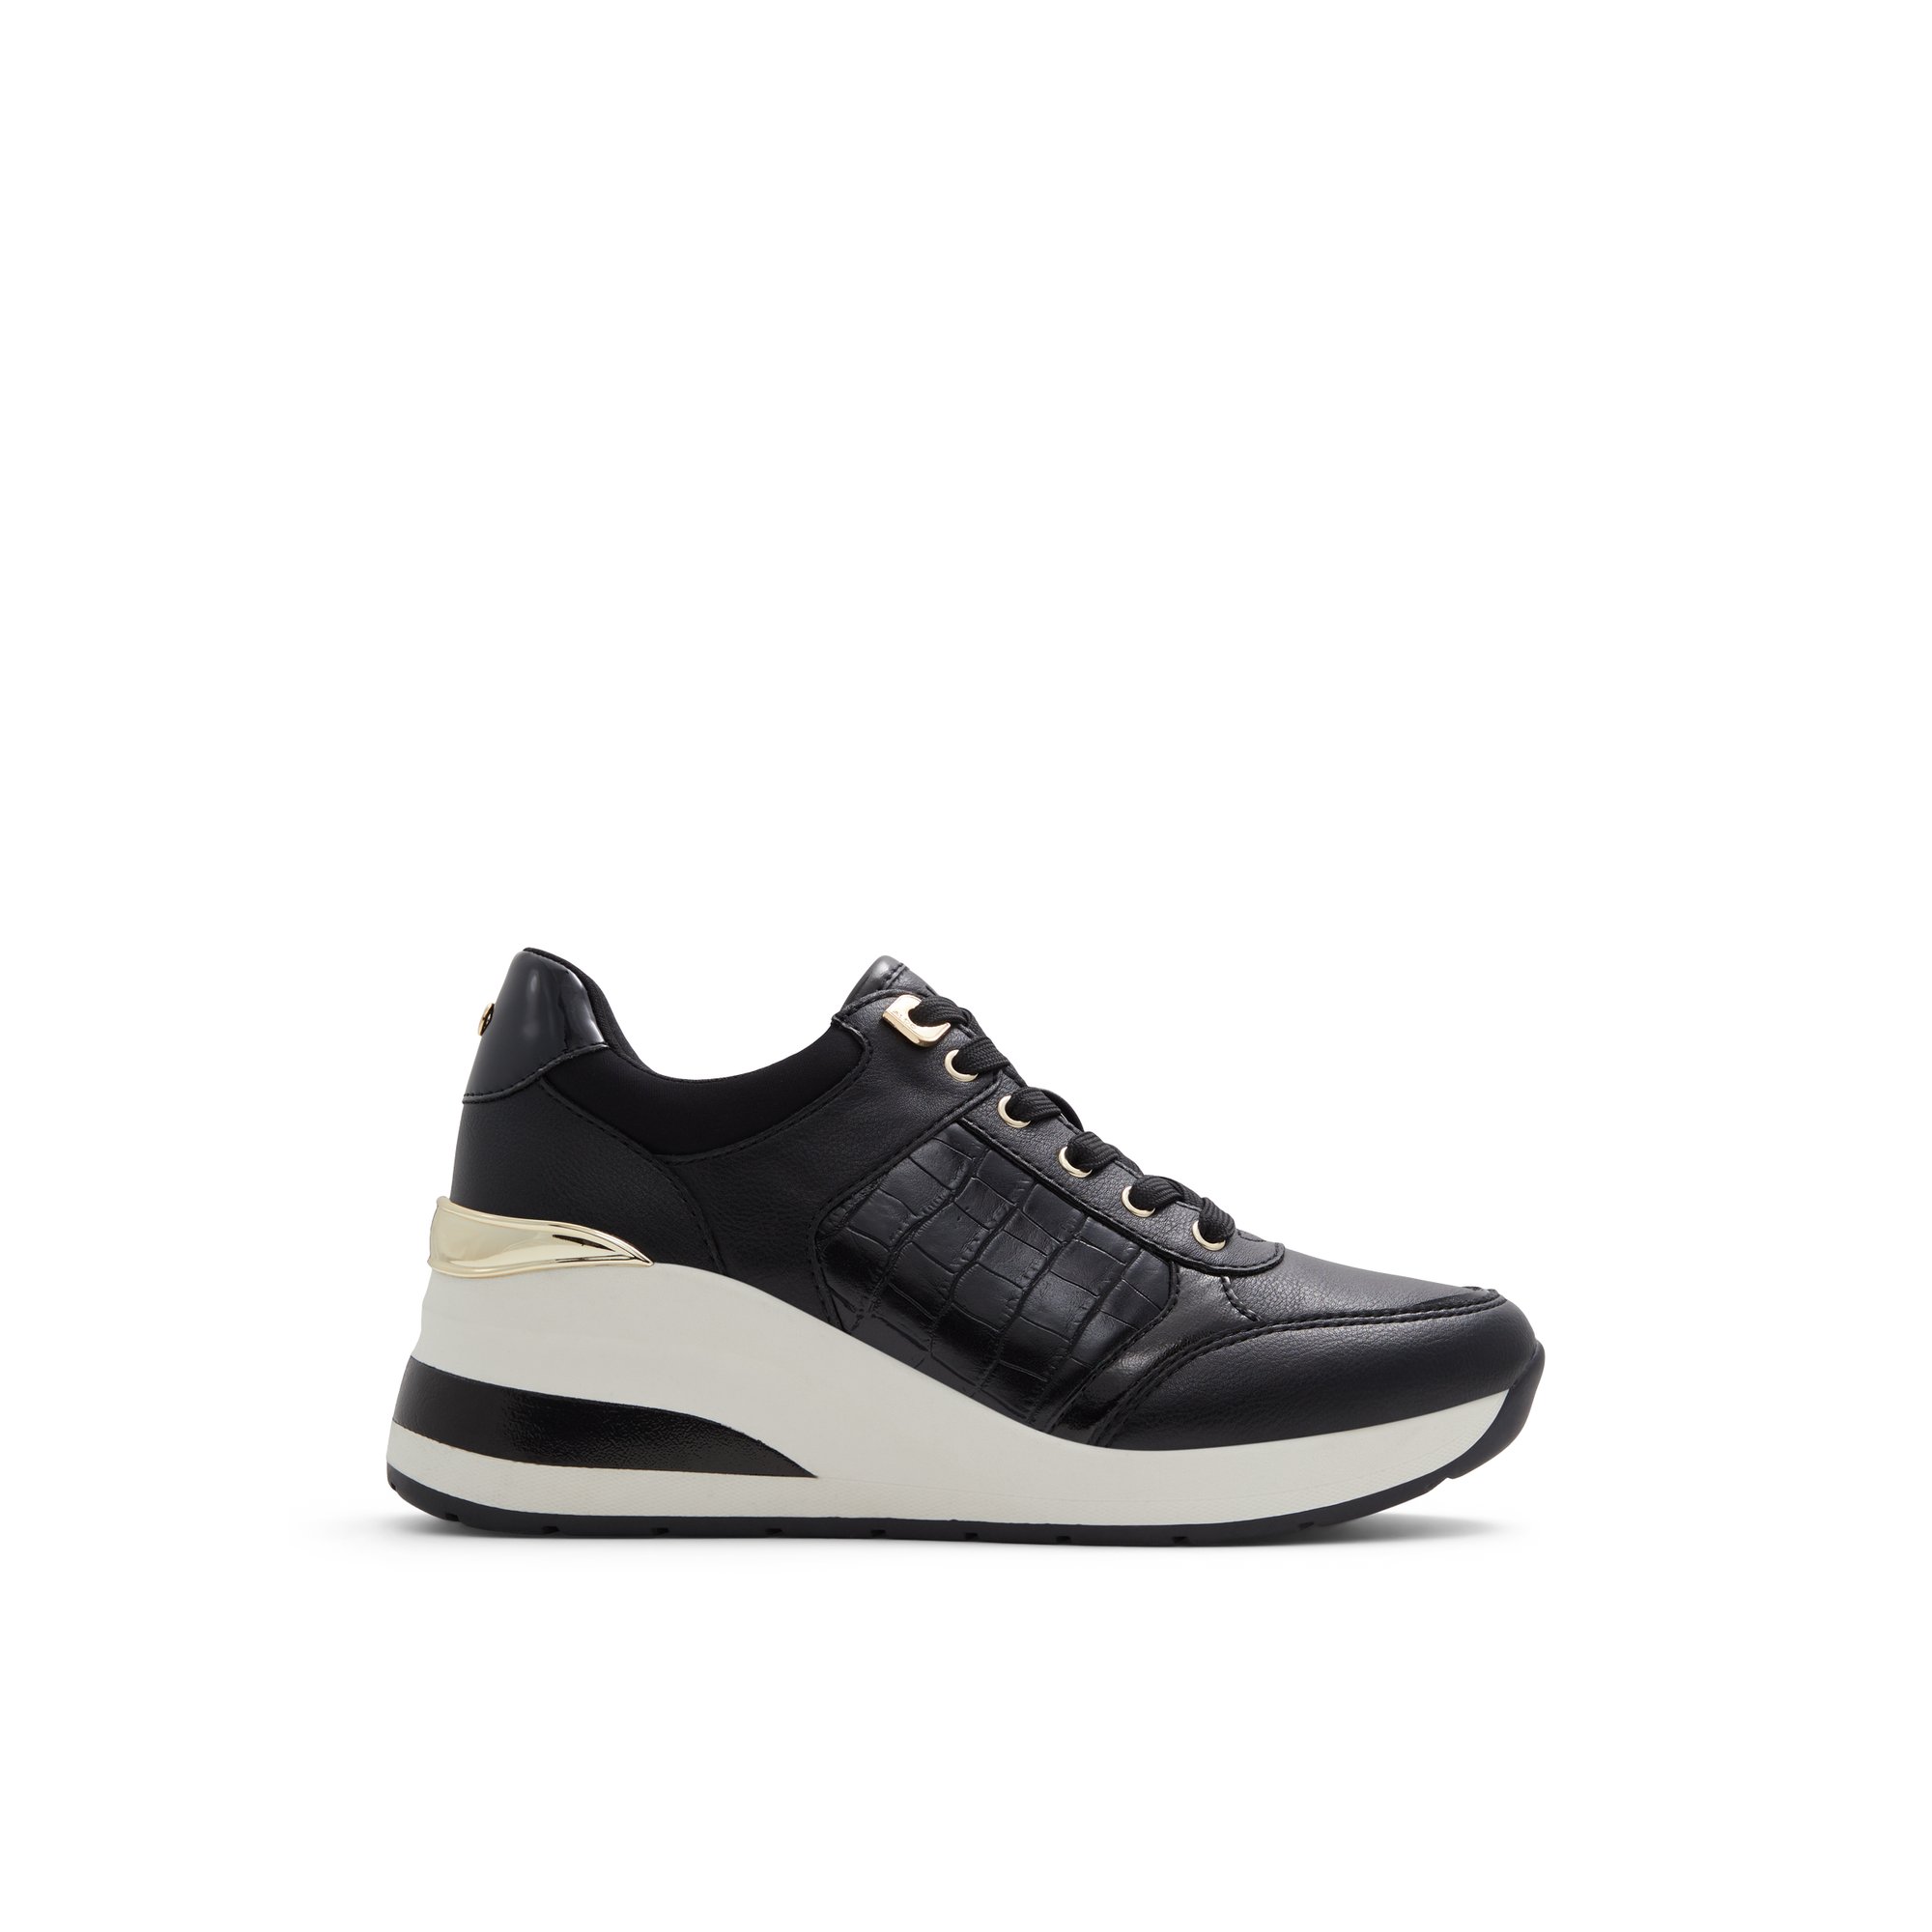 ALDO Iconistep - Women's Athletic Sneaker Sneakers - Black